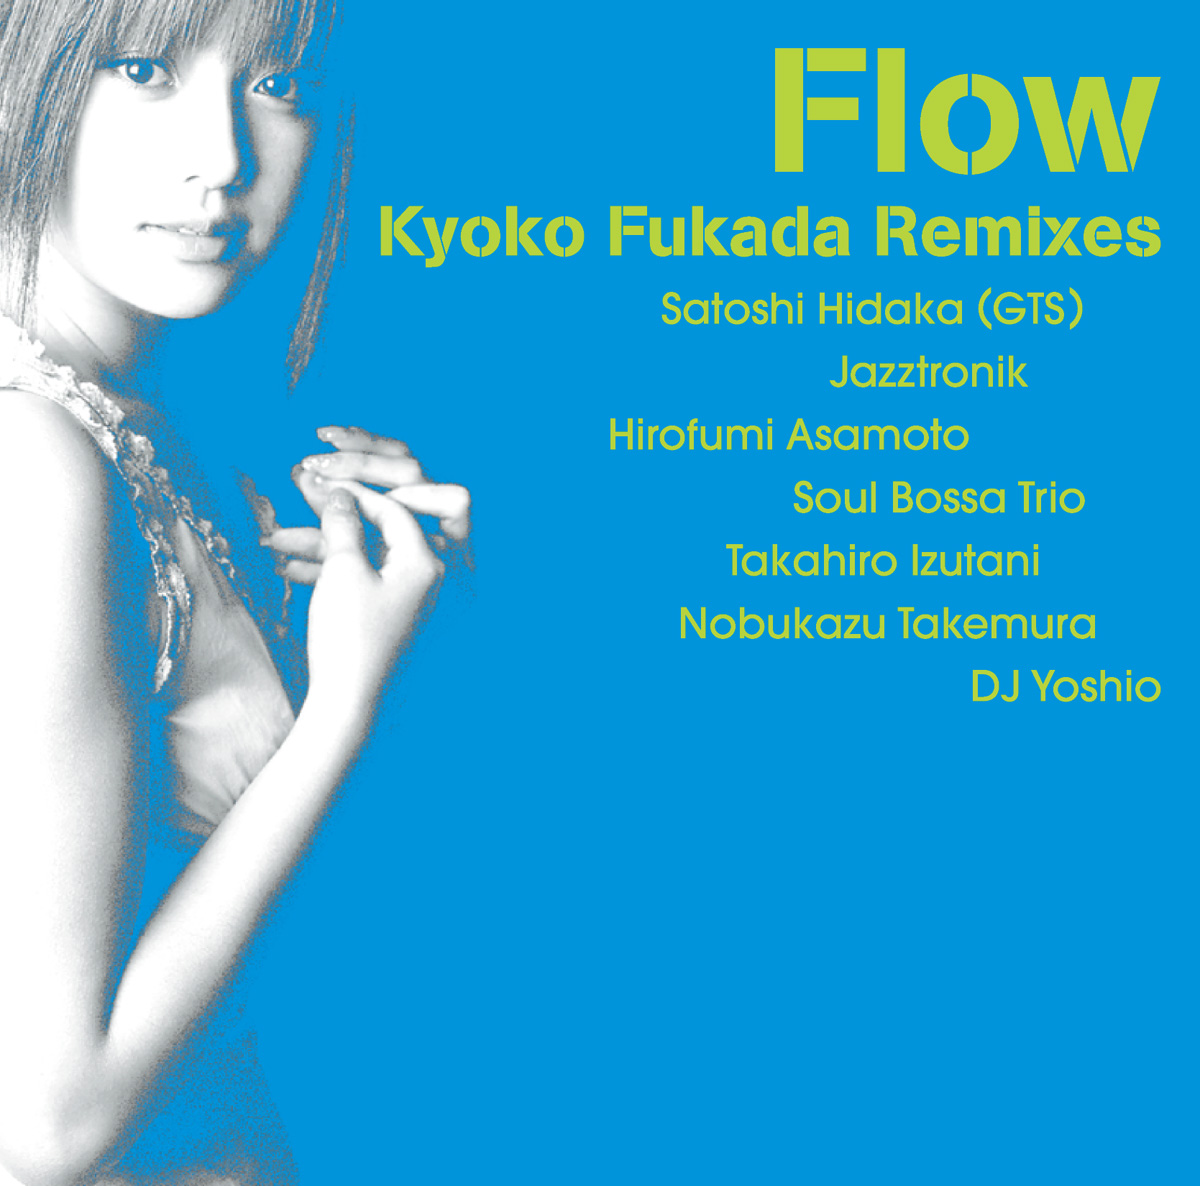 Kyoko Fukada “Remixes Flow”